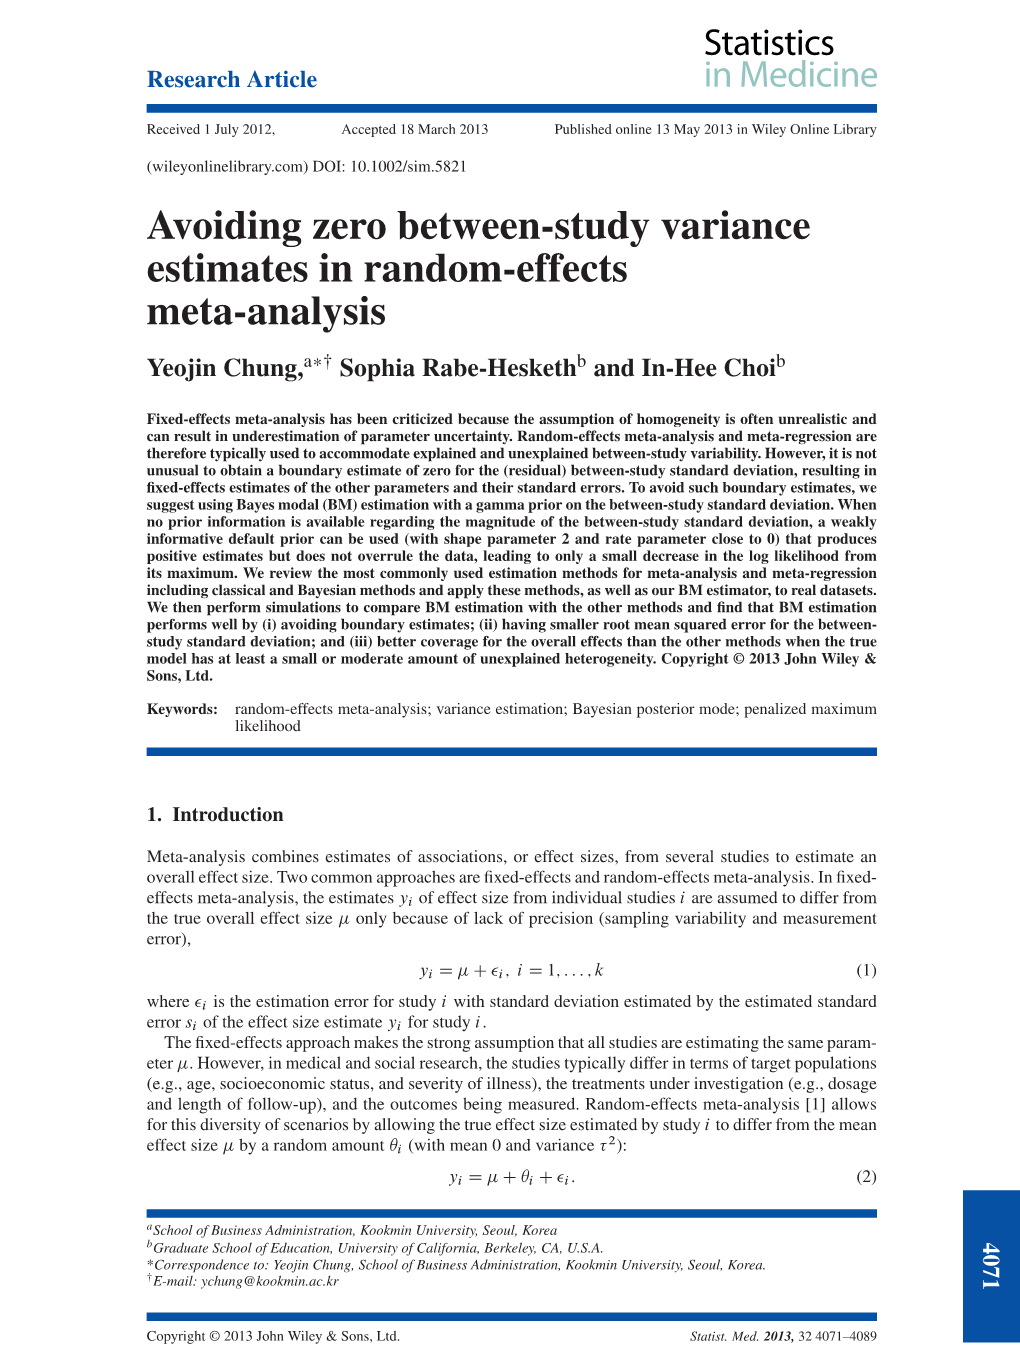 Avoiding Zero Betweenstudy Variance Estimates in Randomeffects